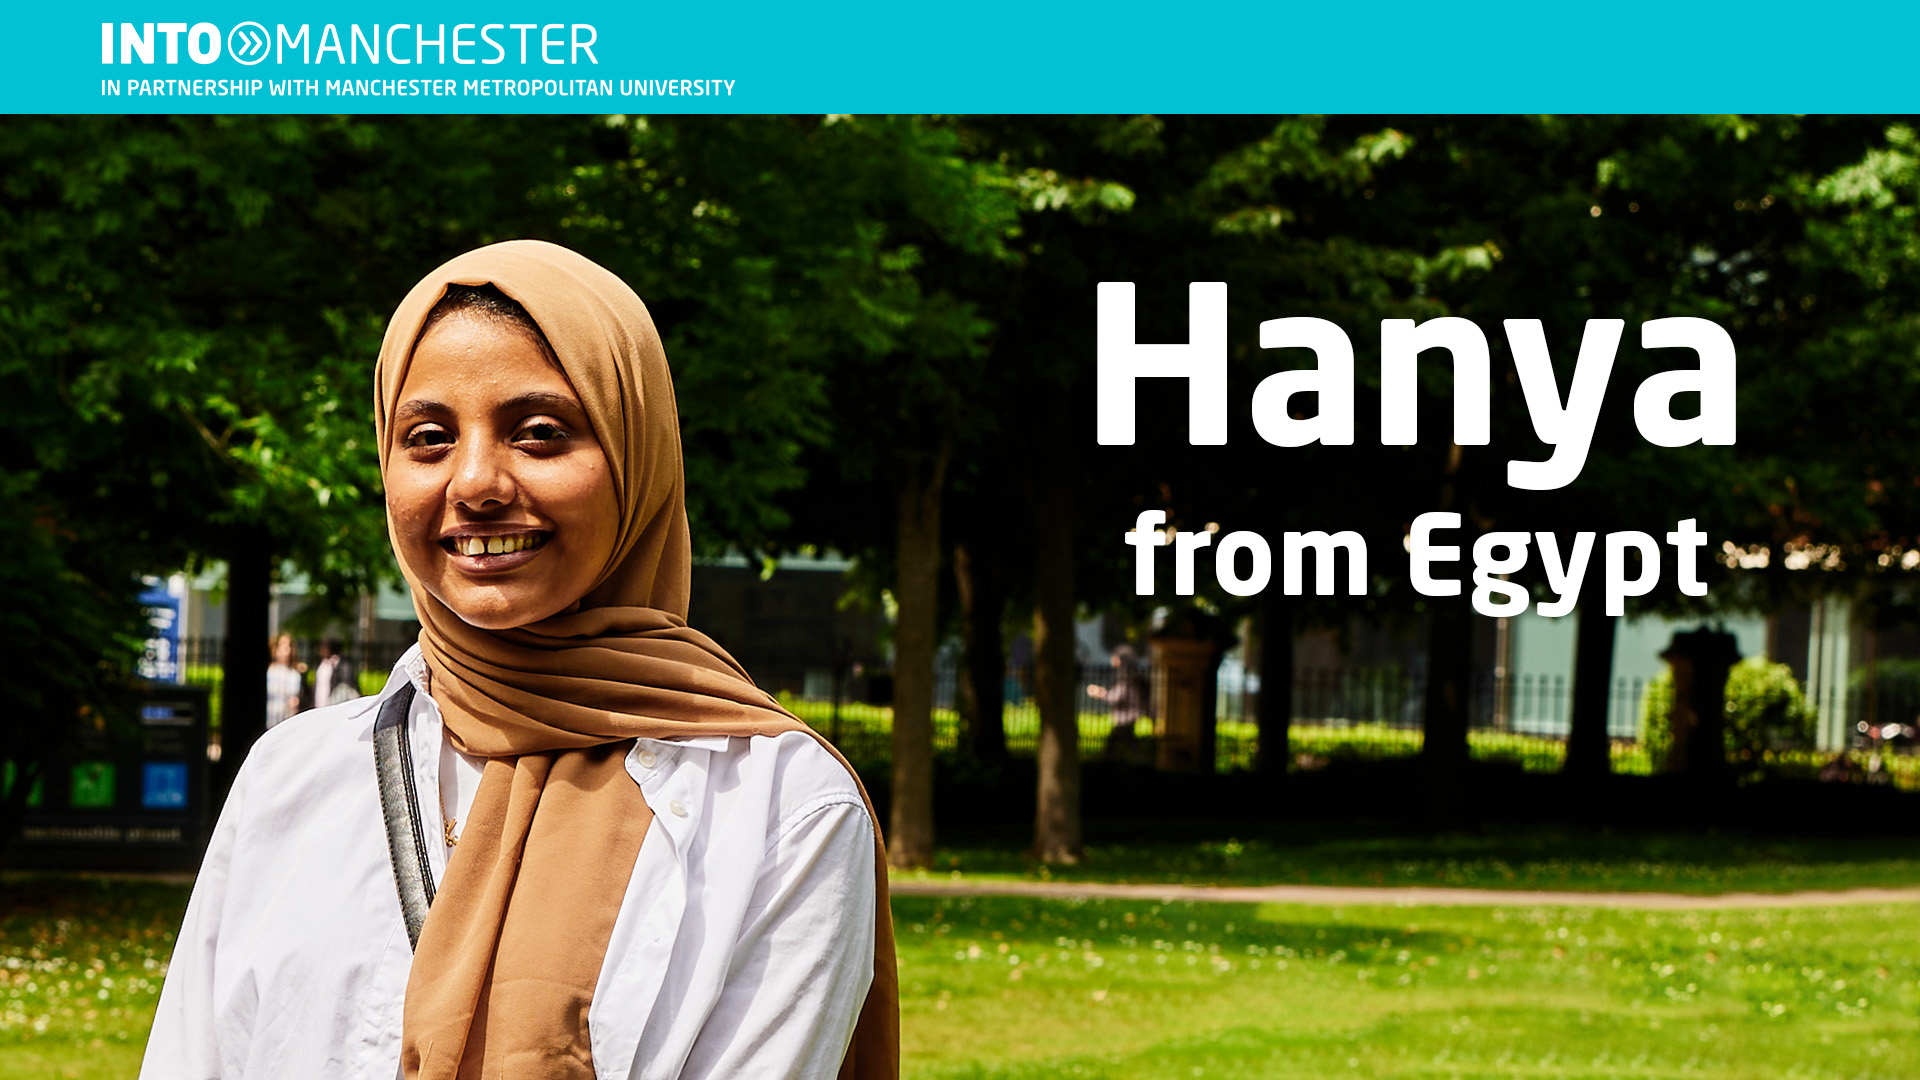  Alumni - Hanya from Egypt